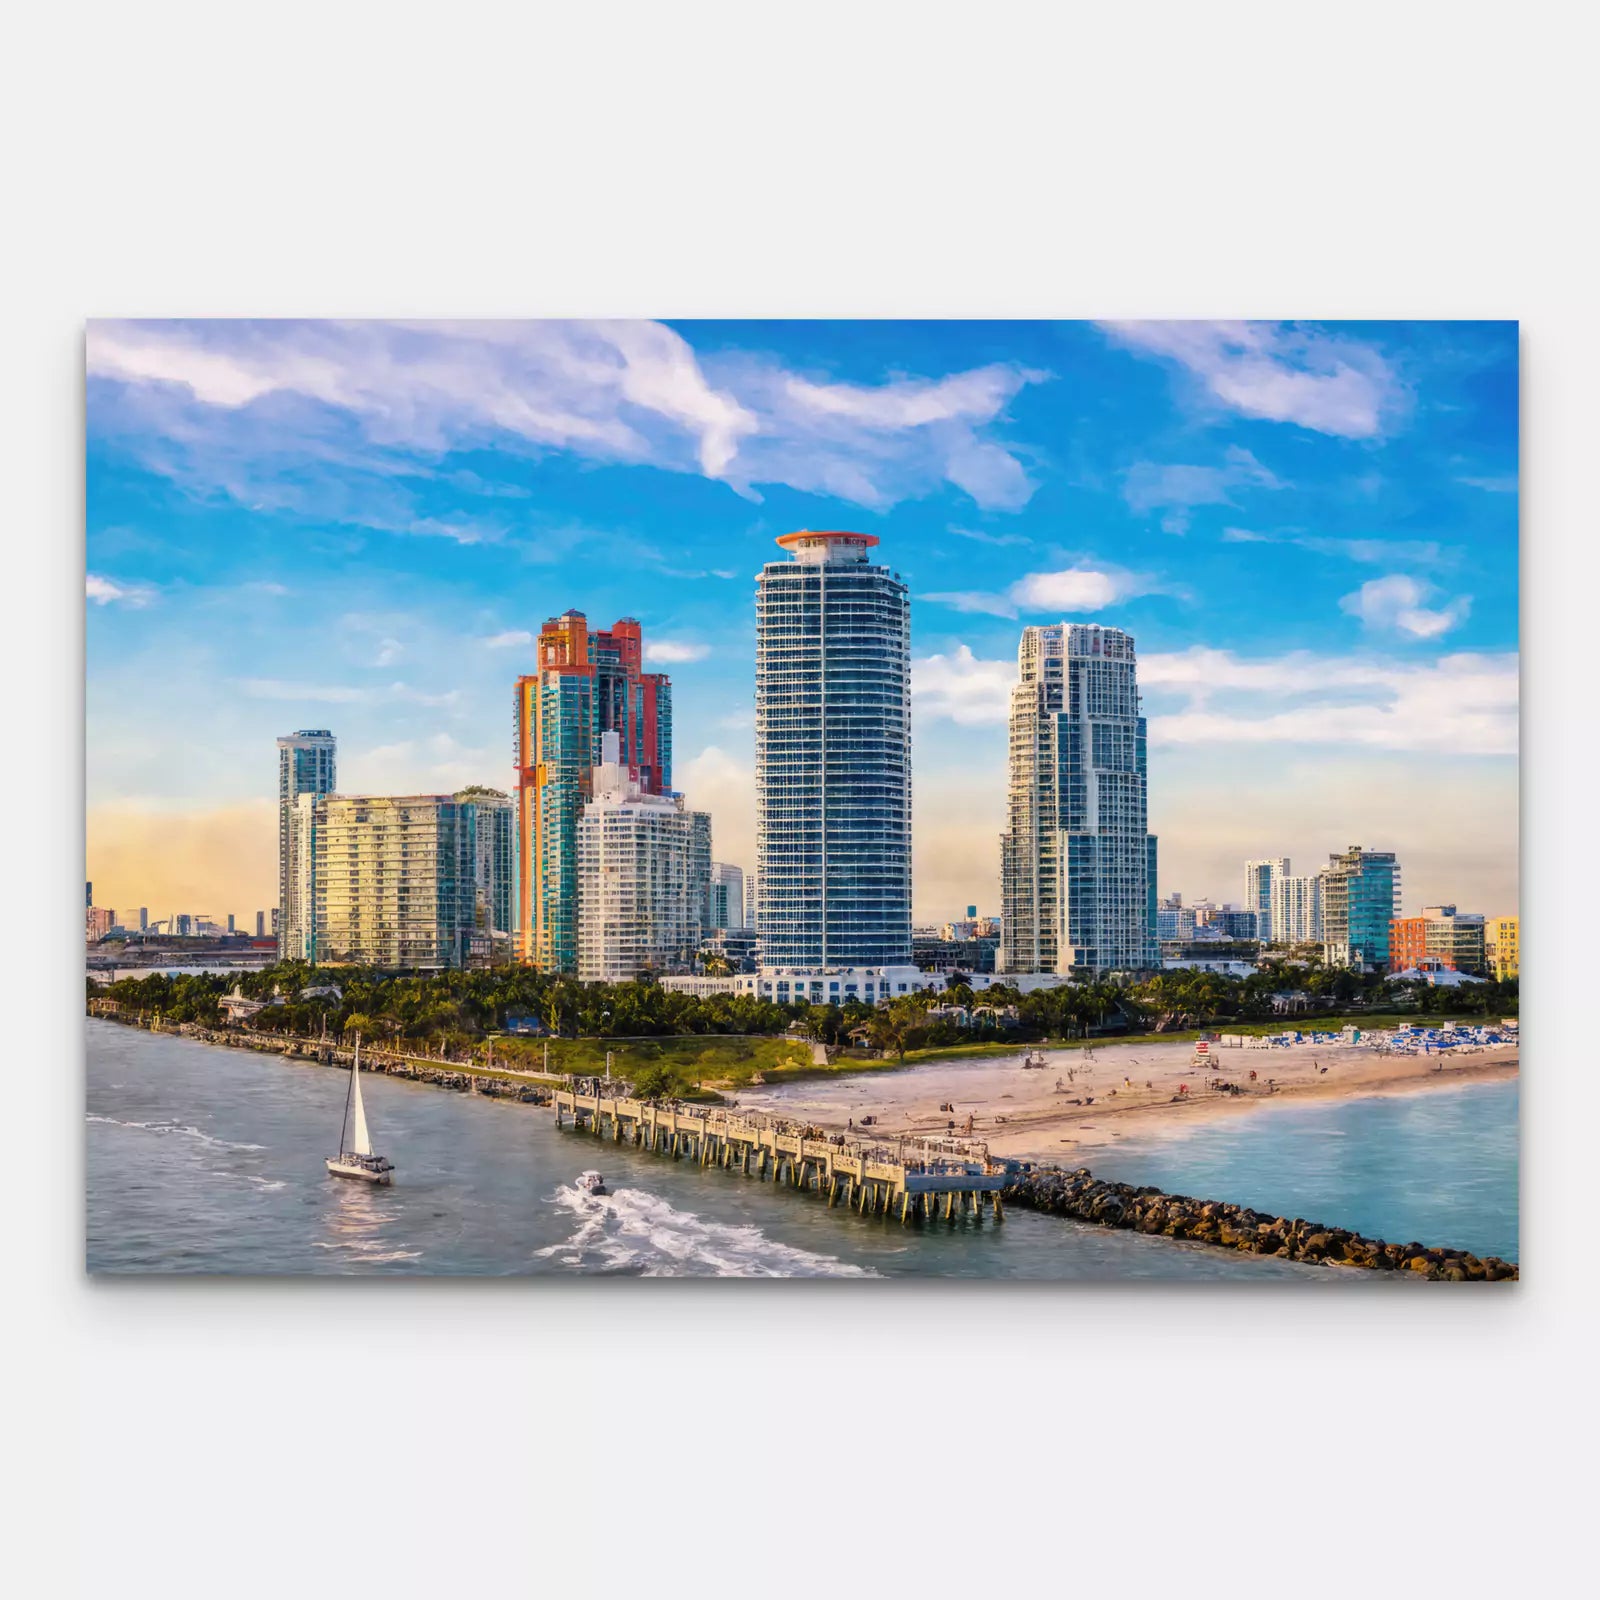 Miami - United States